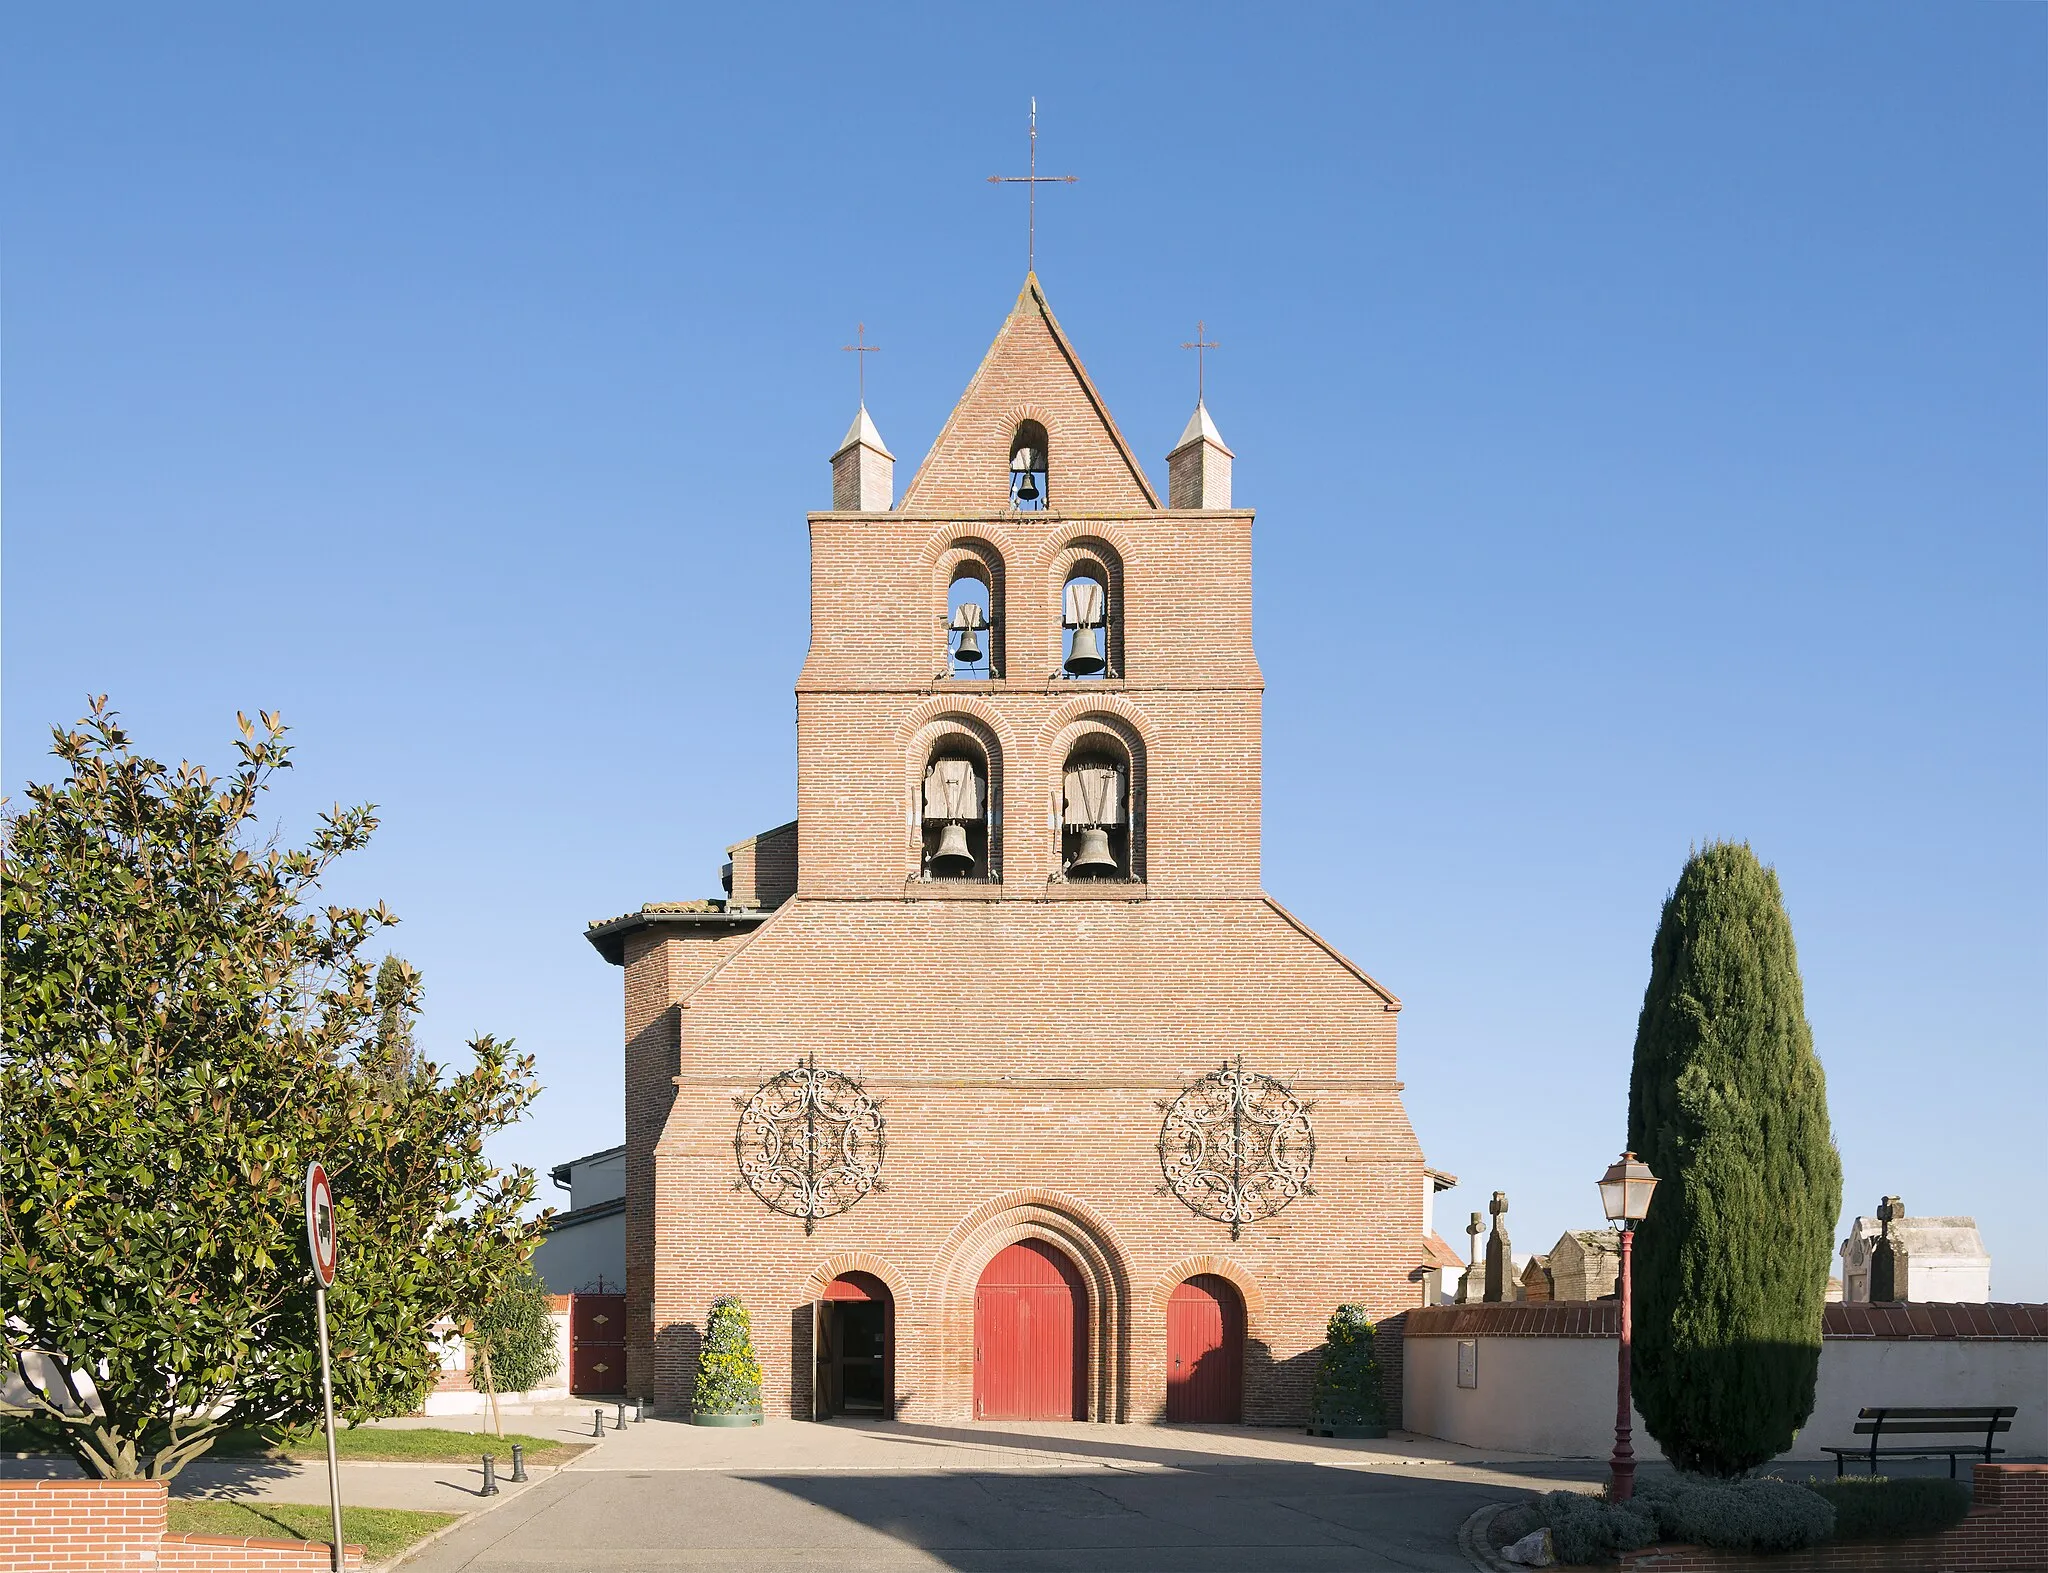 Photo showing: Facade of Saint-Jean-Baptiste Church in Léguevin, Haute-Garonne France